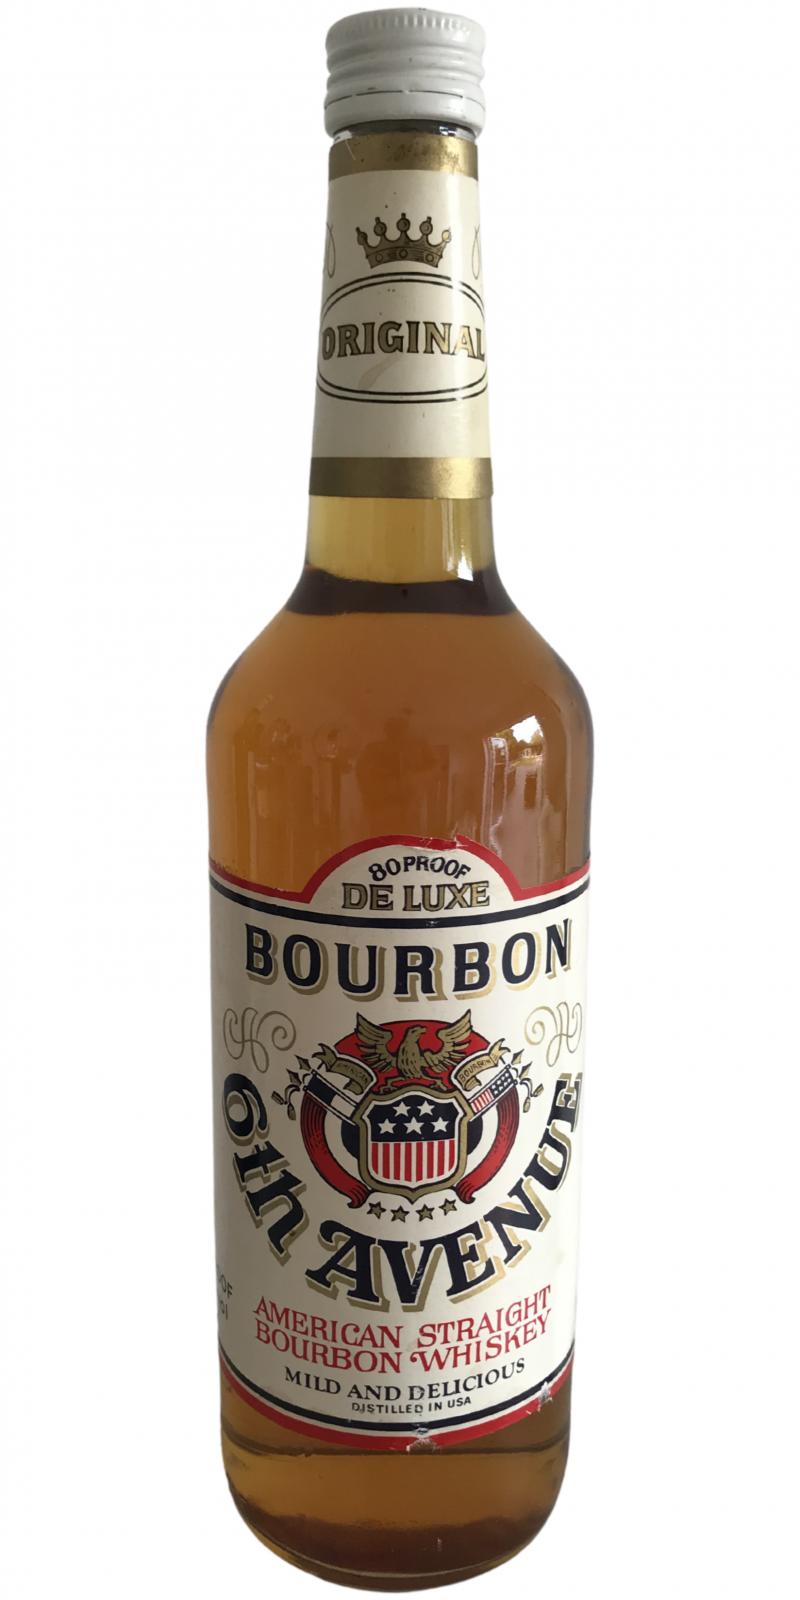 6th Avenue De Luxe Bourbon American Straight Bourbon Whisky 40% 700ml